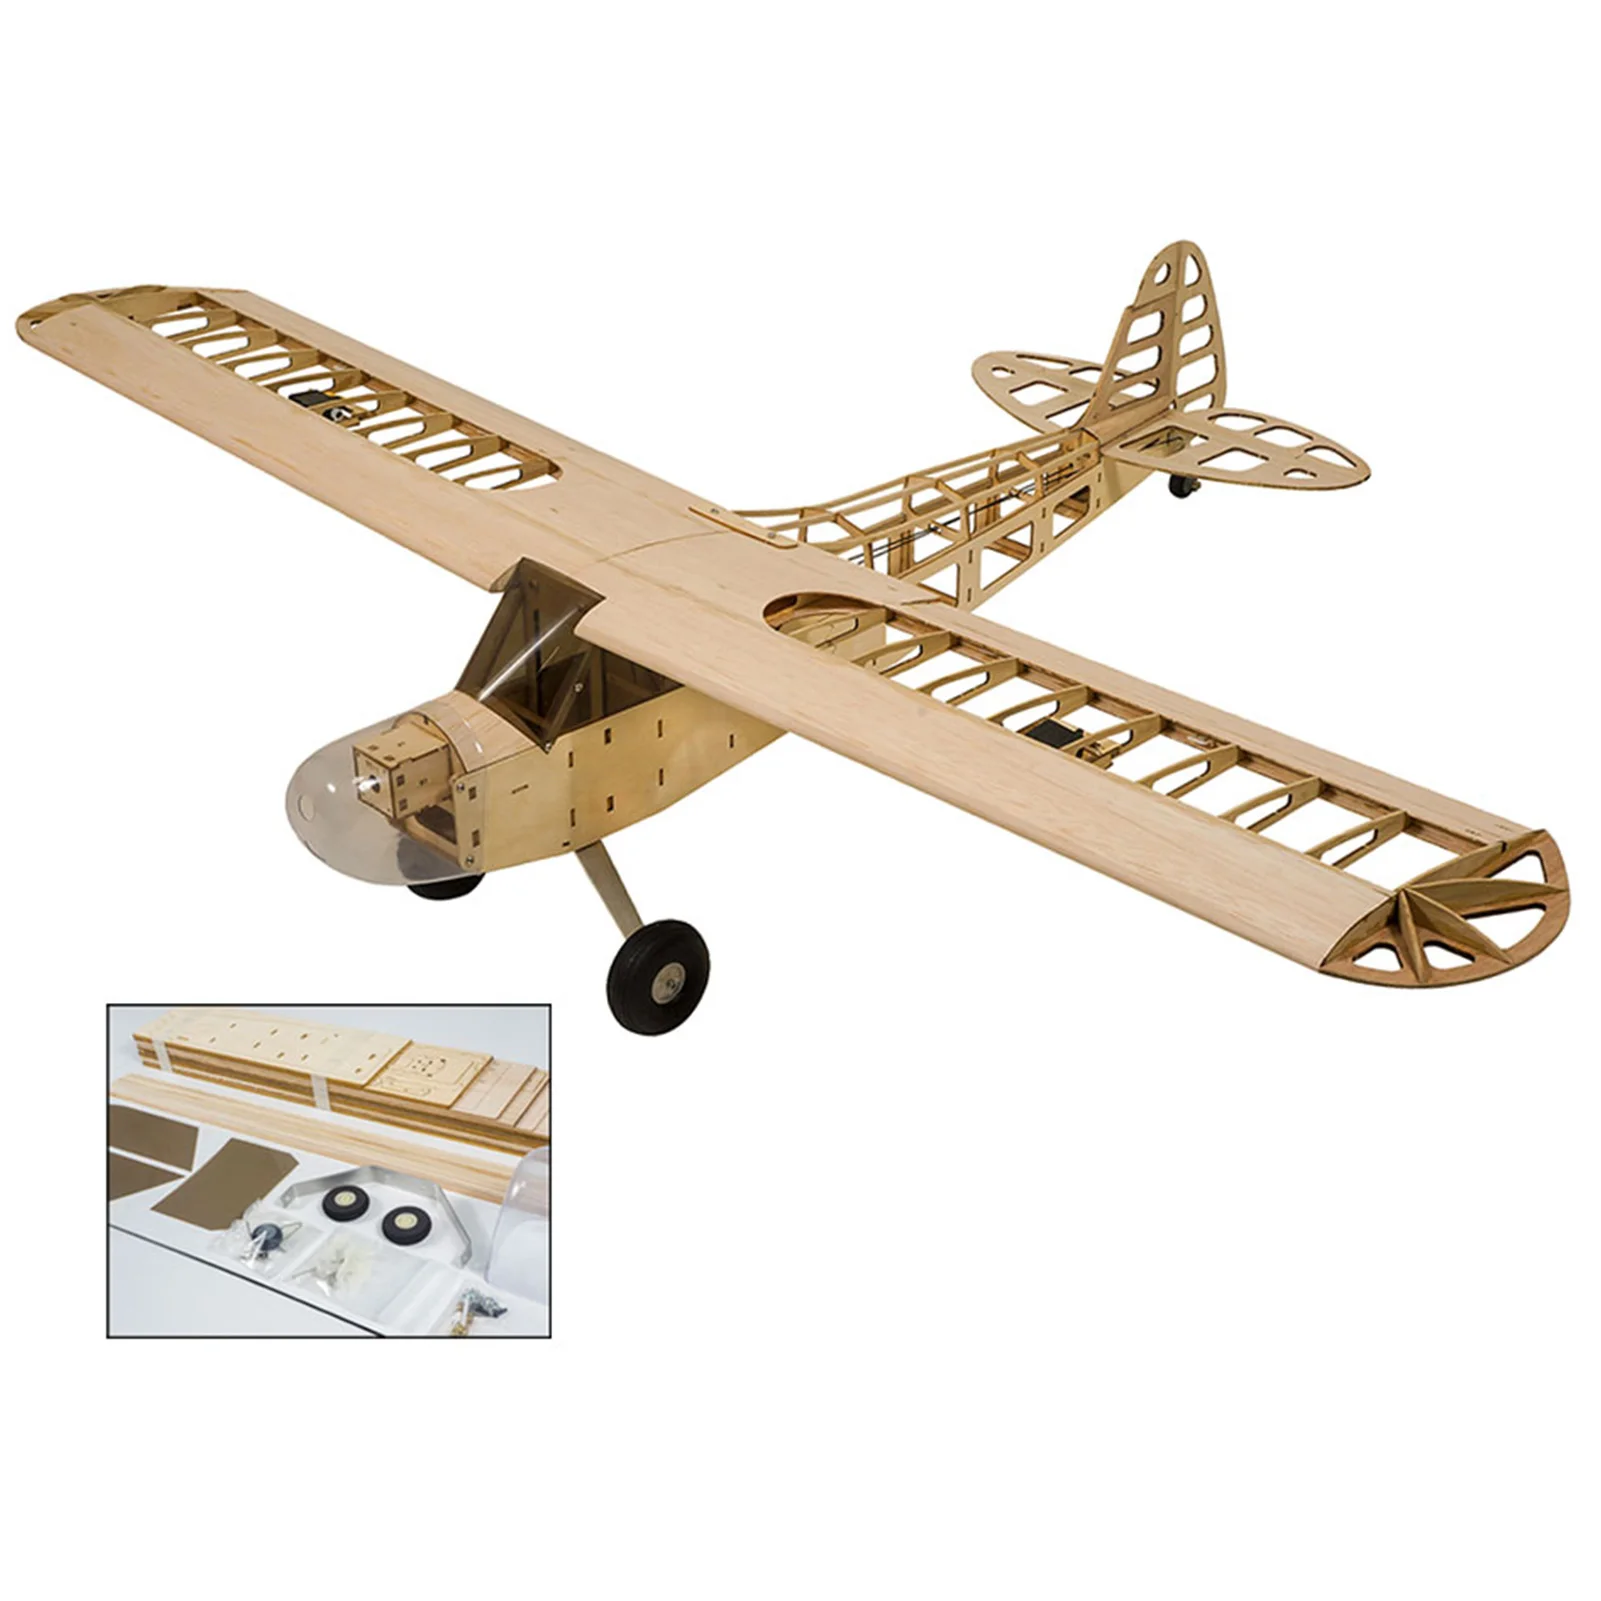 Dancing Wings Hobby S0801Balsa Wood RC Airplane 1.2M Piper Cub Remote Control Aircraft KIT/PNP Version DIY Flying Model